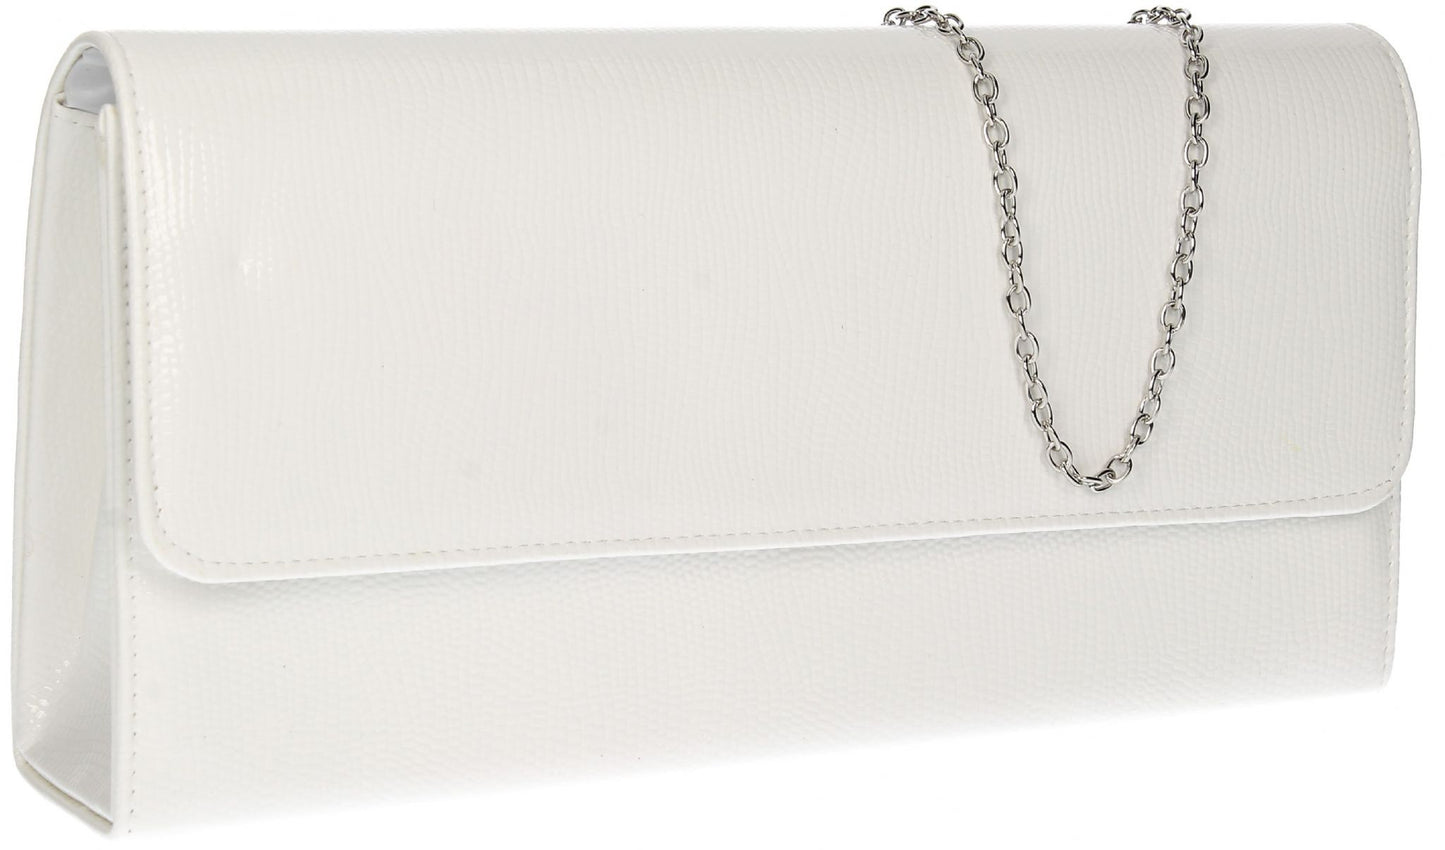 SWANKYSWANS Soho Clutch Bag White Cute Cheap Clutch Bag For Weddings School and Work